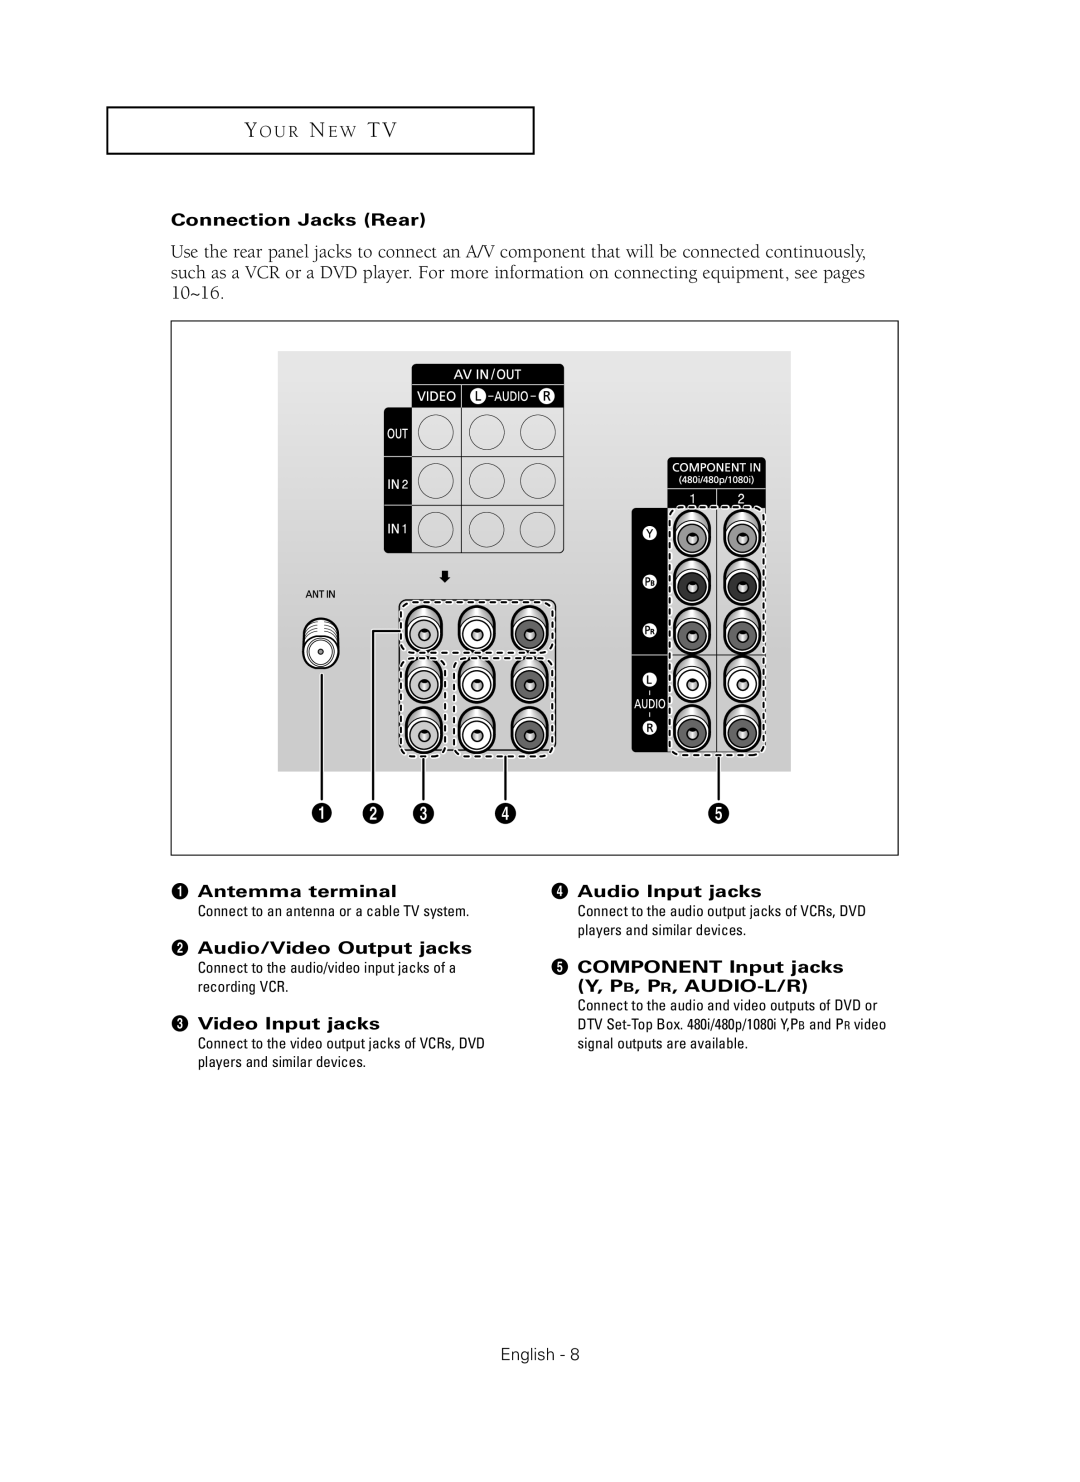 Samsung HC-P4241W Connection Jacks Rear, Œ Antemma terminal, ¨ Audio Input jacks, ´ Audio/Video Output jacks, English 